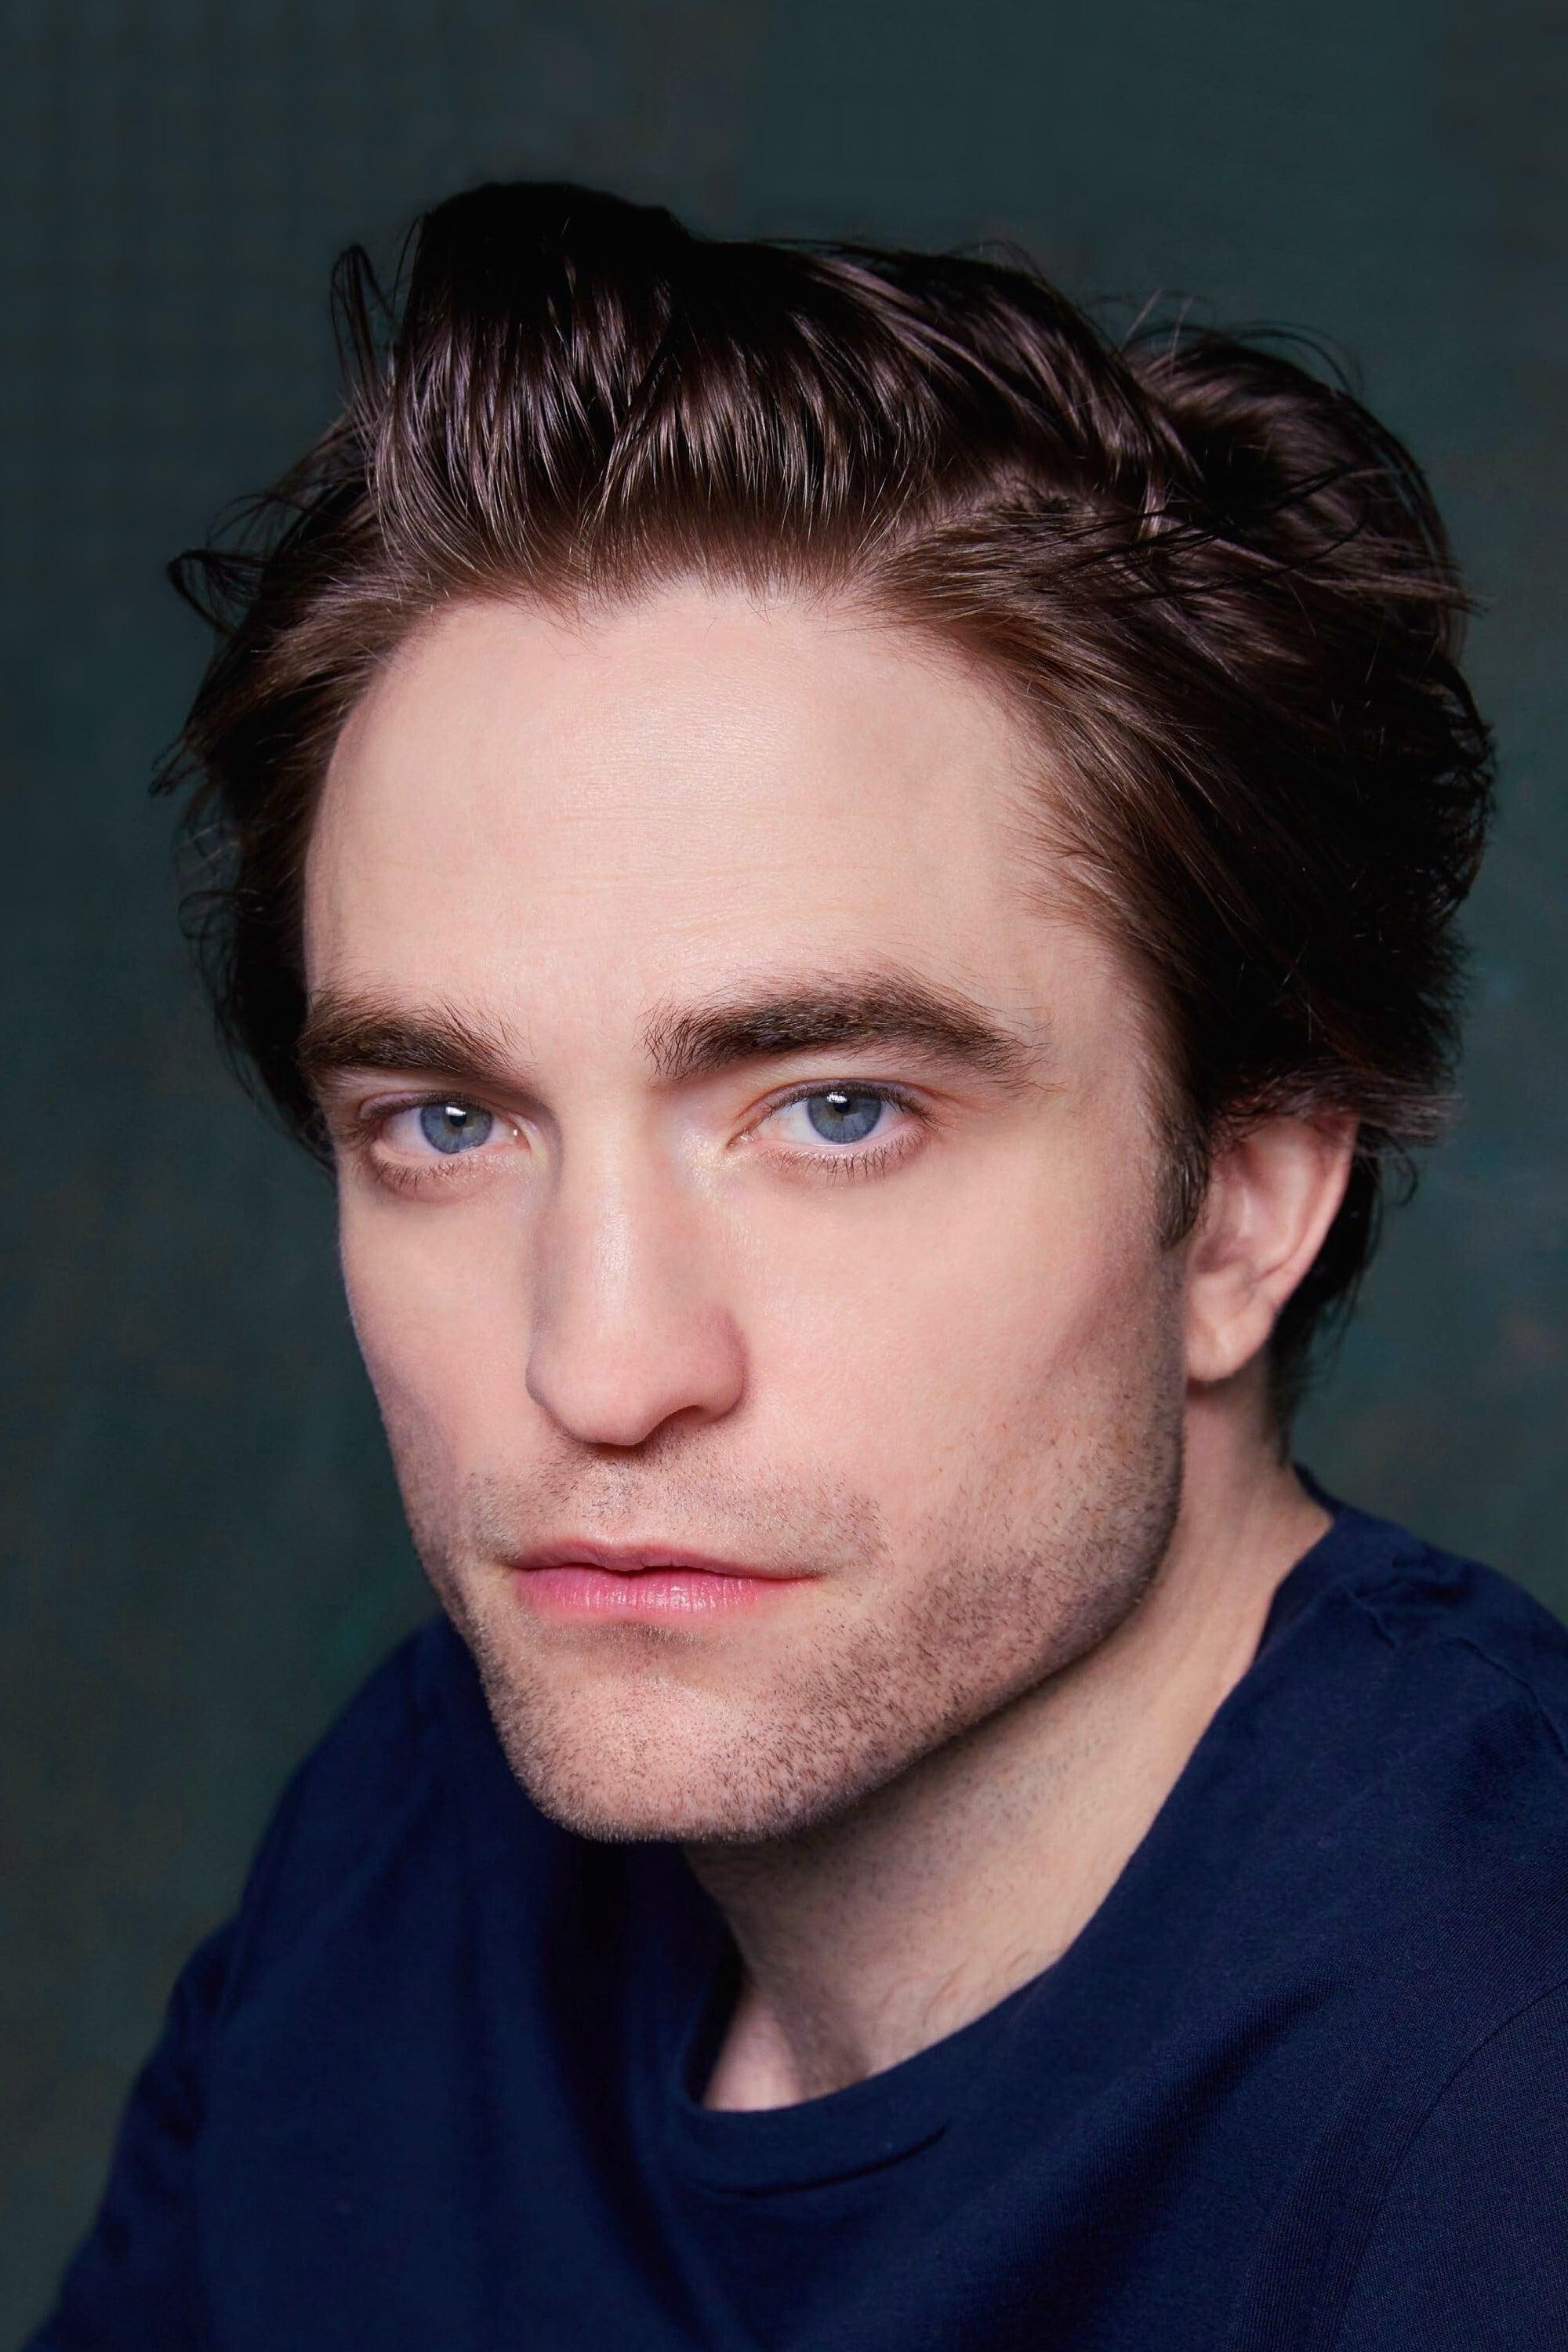 Robert Pattinson | Charles Marker / The Leader